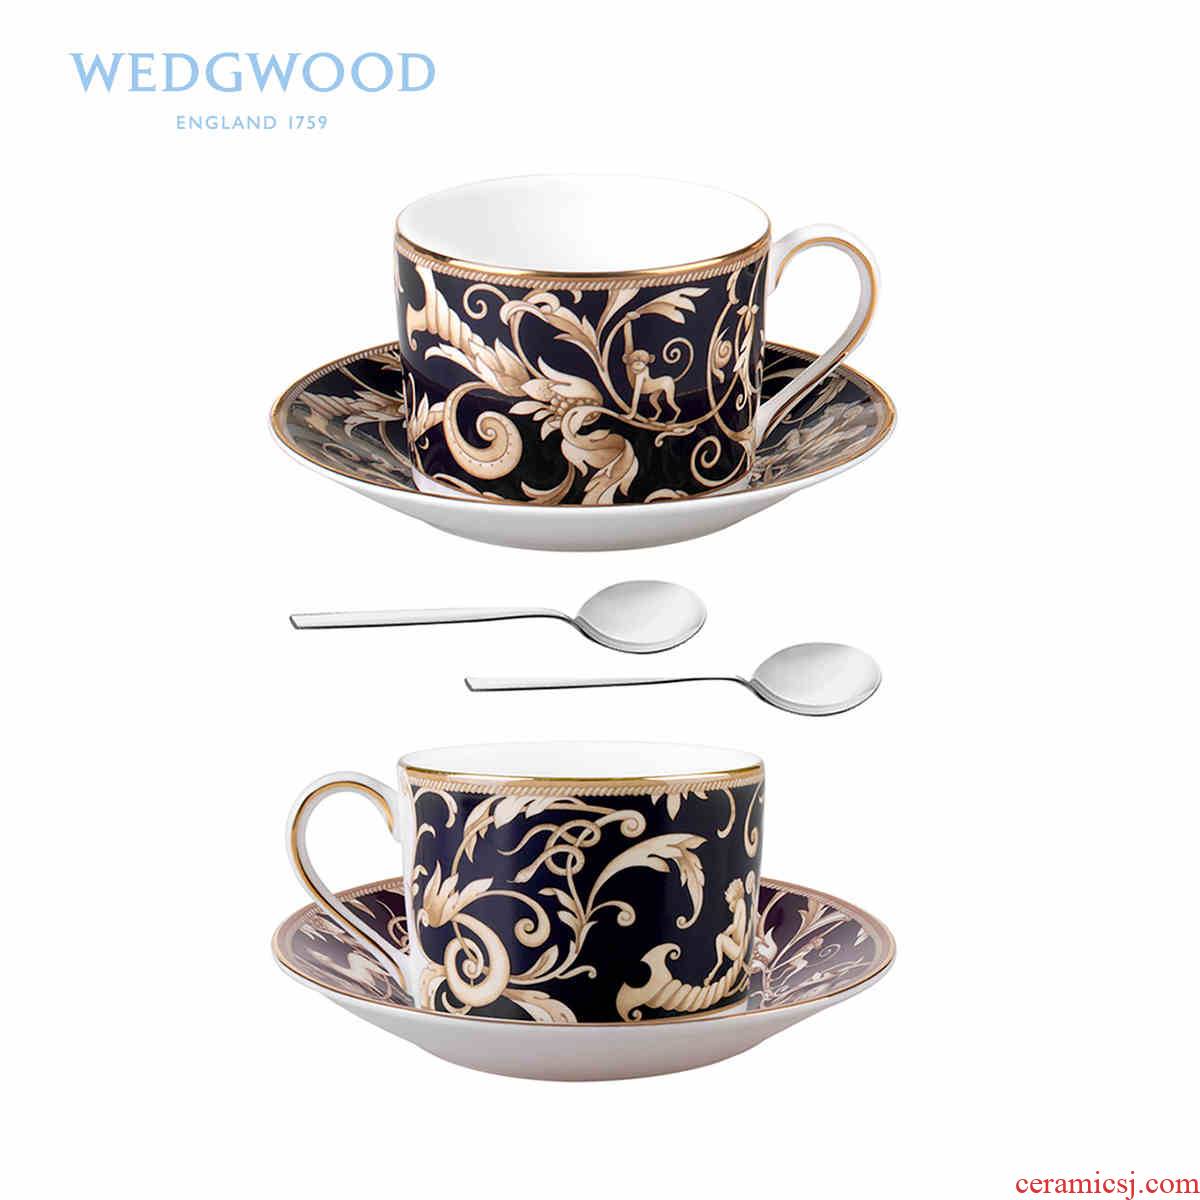 Wedgwood waterford Wedgwood Cornucopia the Cornucopia dark blue ipads porcelain cup 2 disc 2 tablespoons of tea/coffee cup